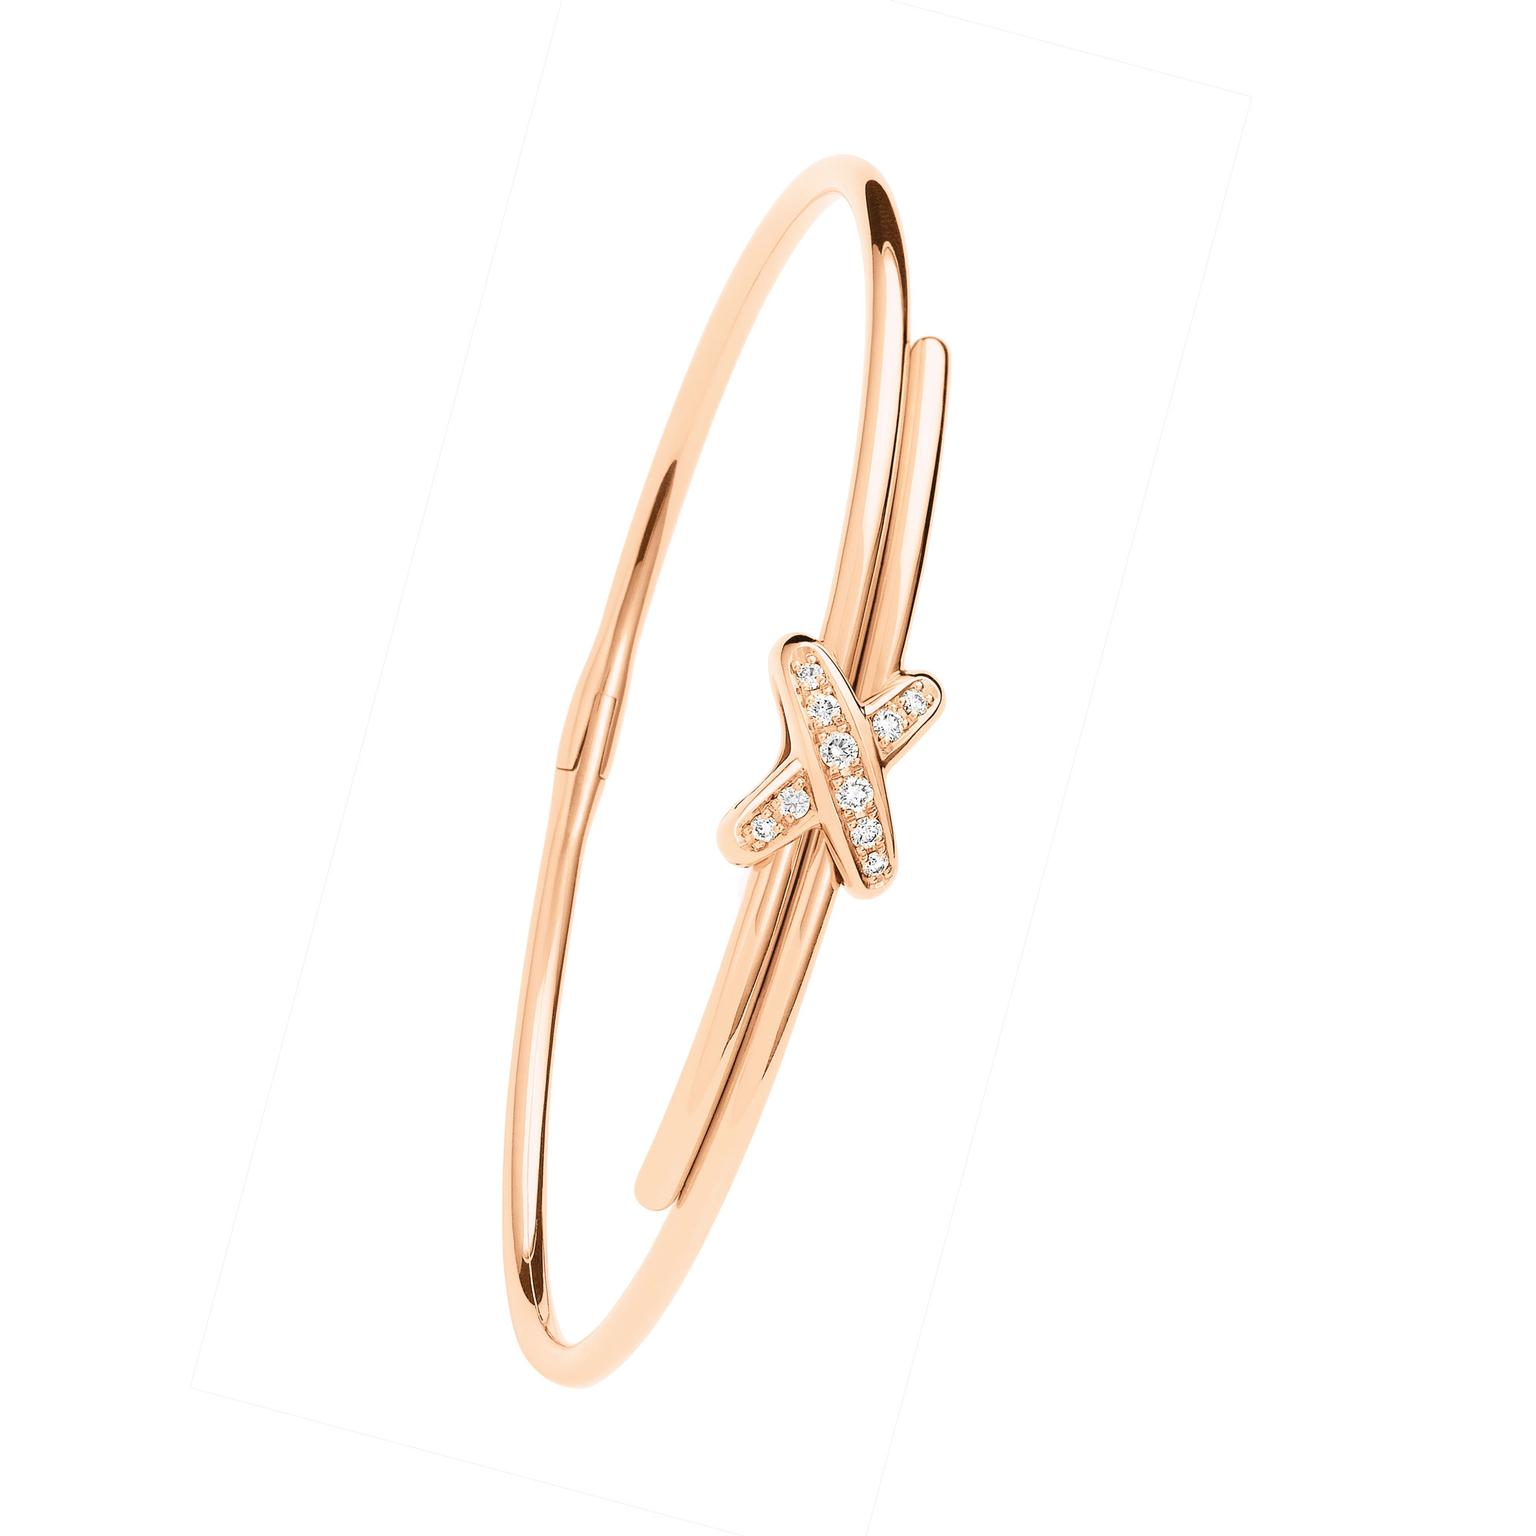 Chaumet Liens rose gold and diamond bracelet